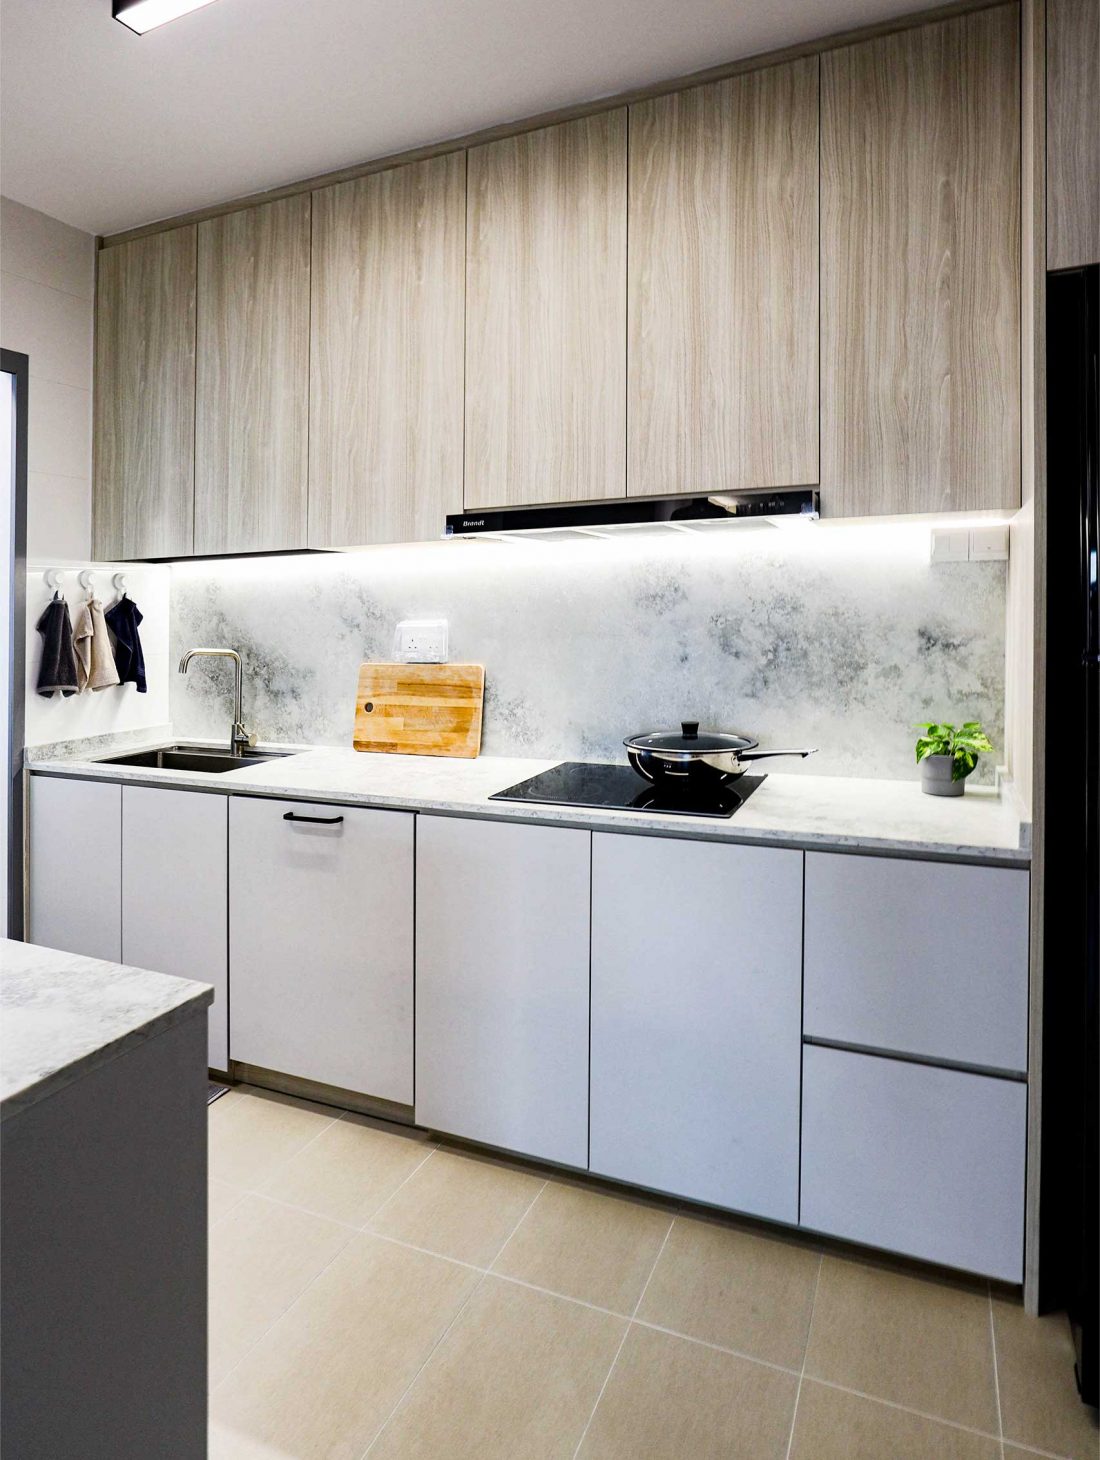 HDB storage kitchen cabinet top and bottom shelves design at Margaret drive and marble backsplash